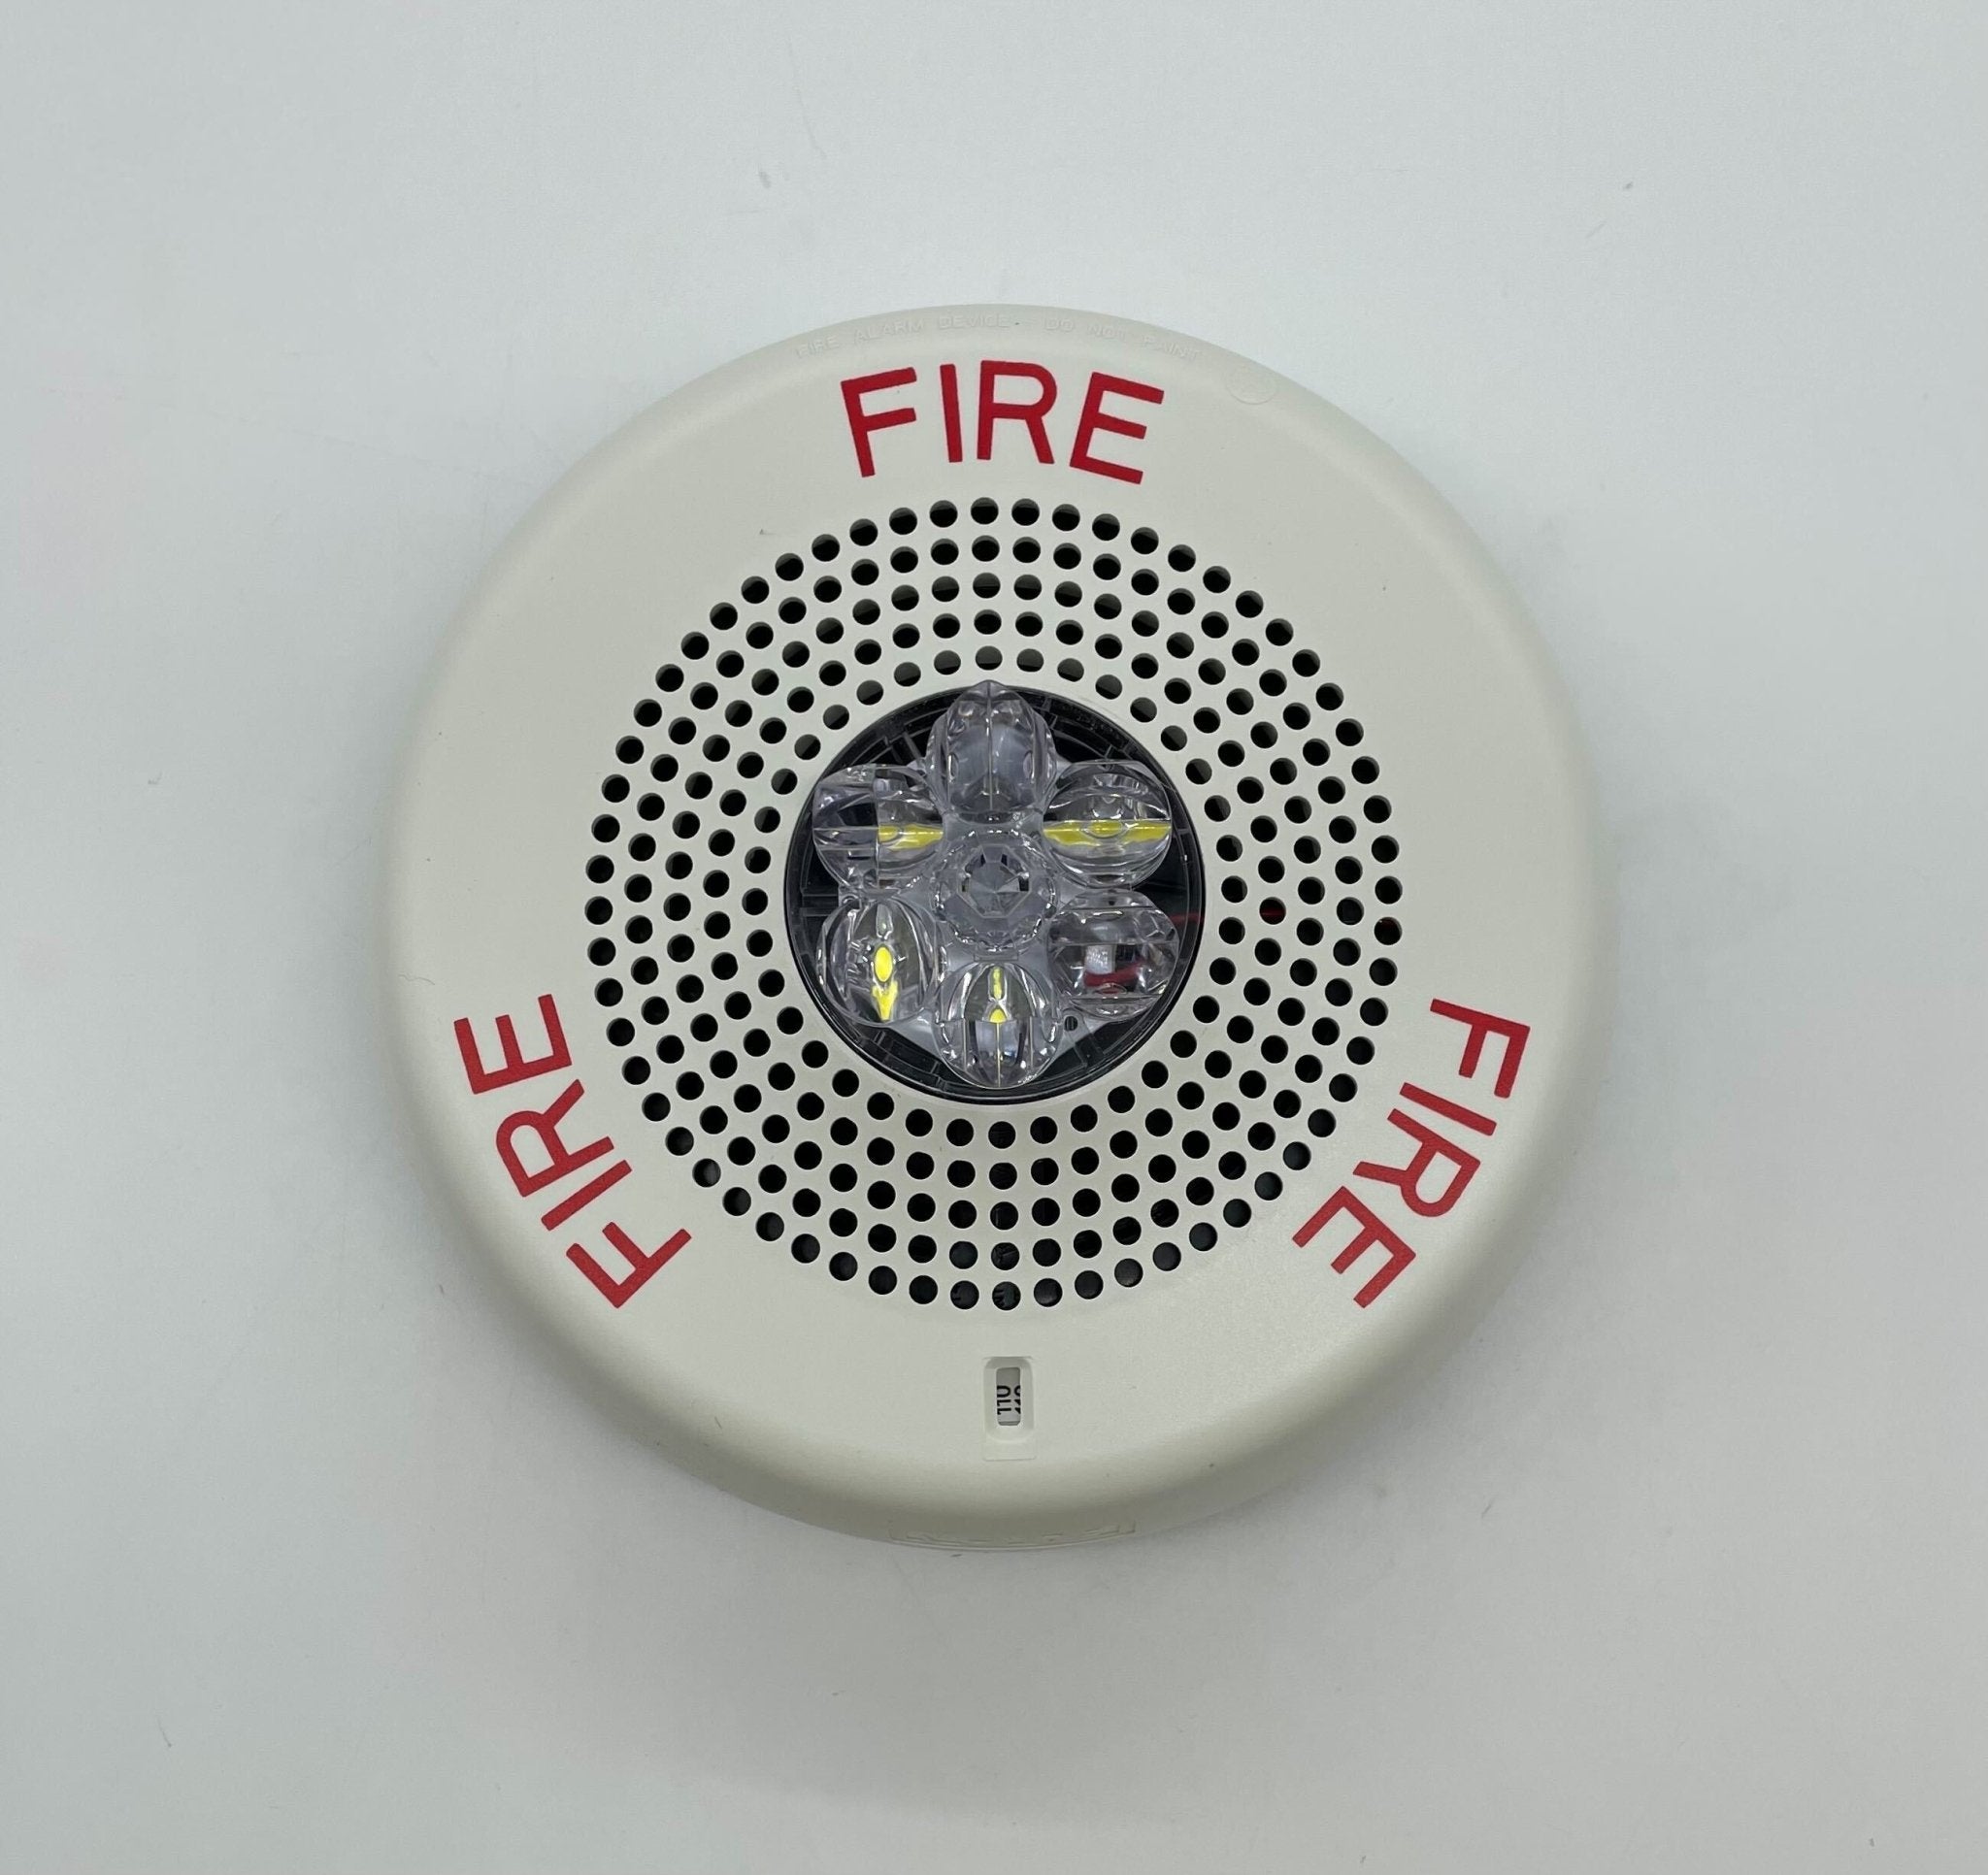 Wheelock ELFHSWC - The Fire Alarm Supplier